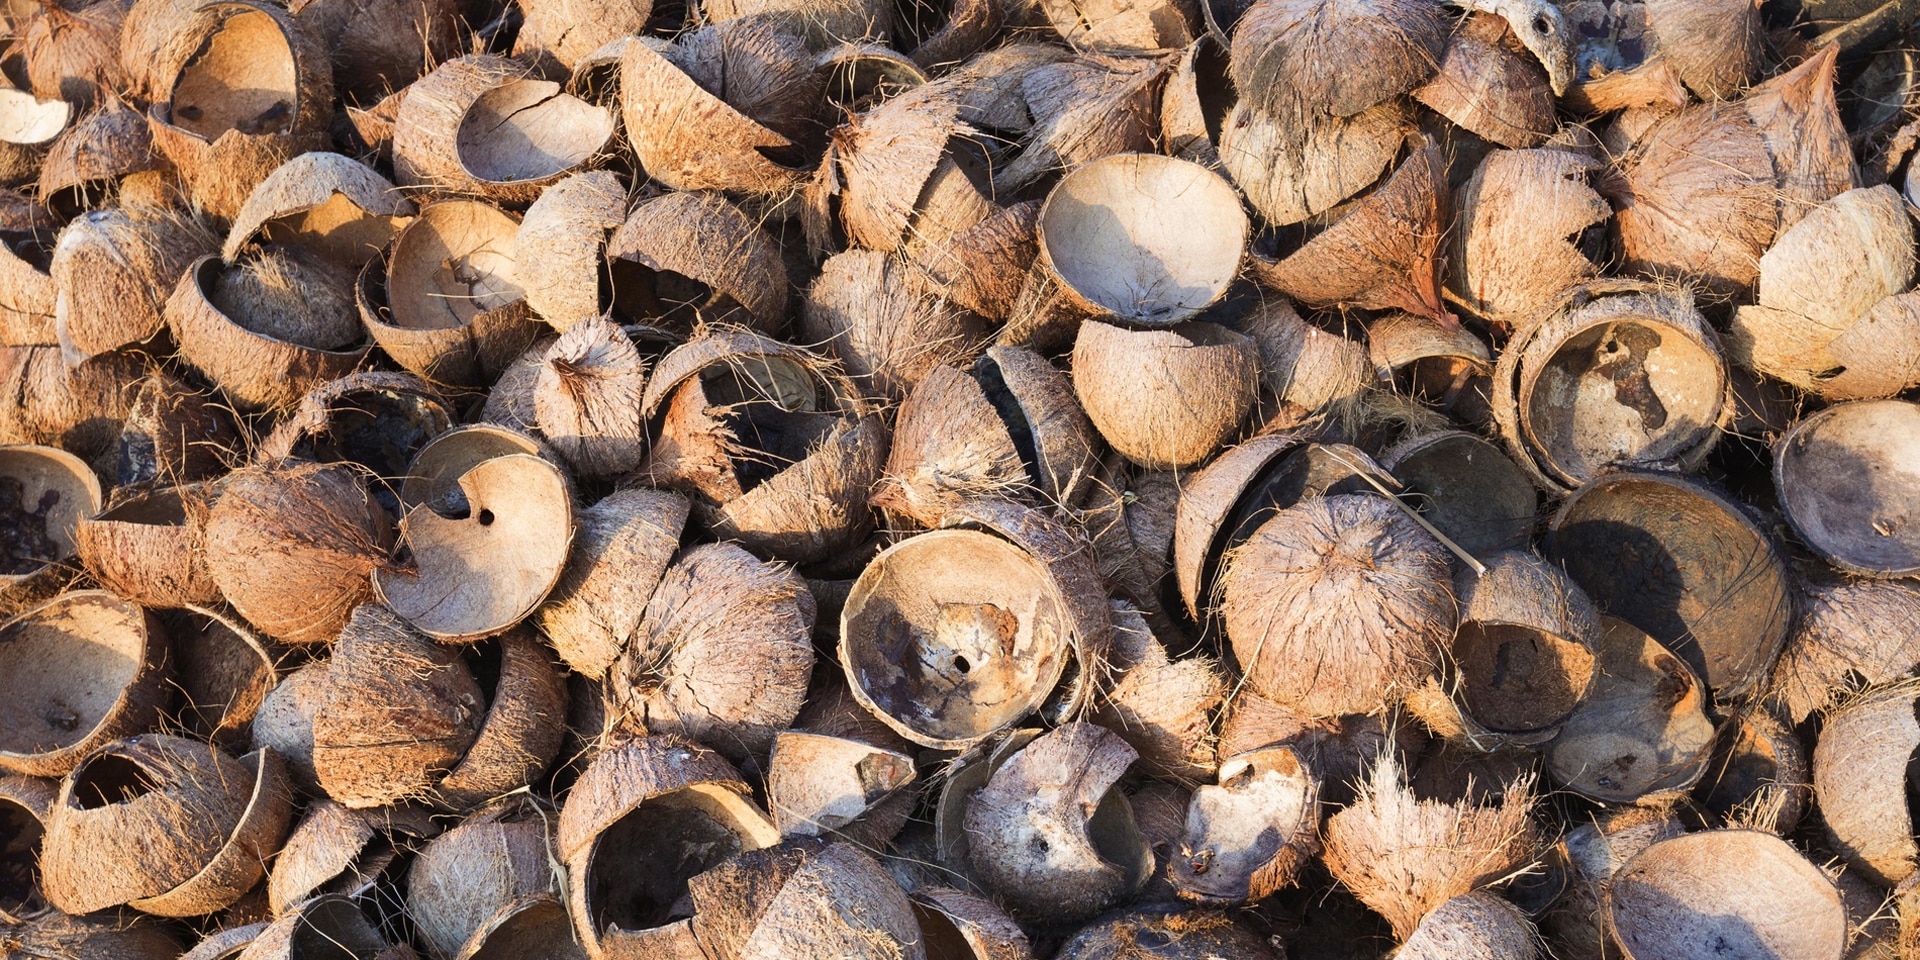  Dozens of coconut shells strewn on the ground.